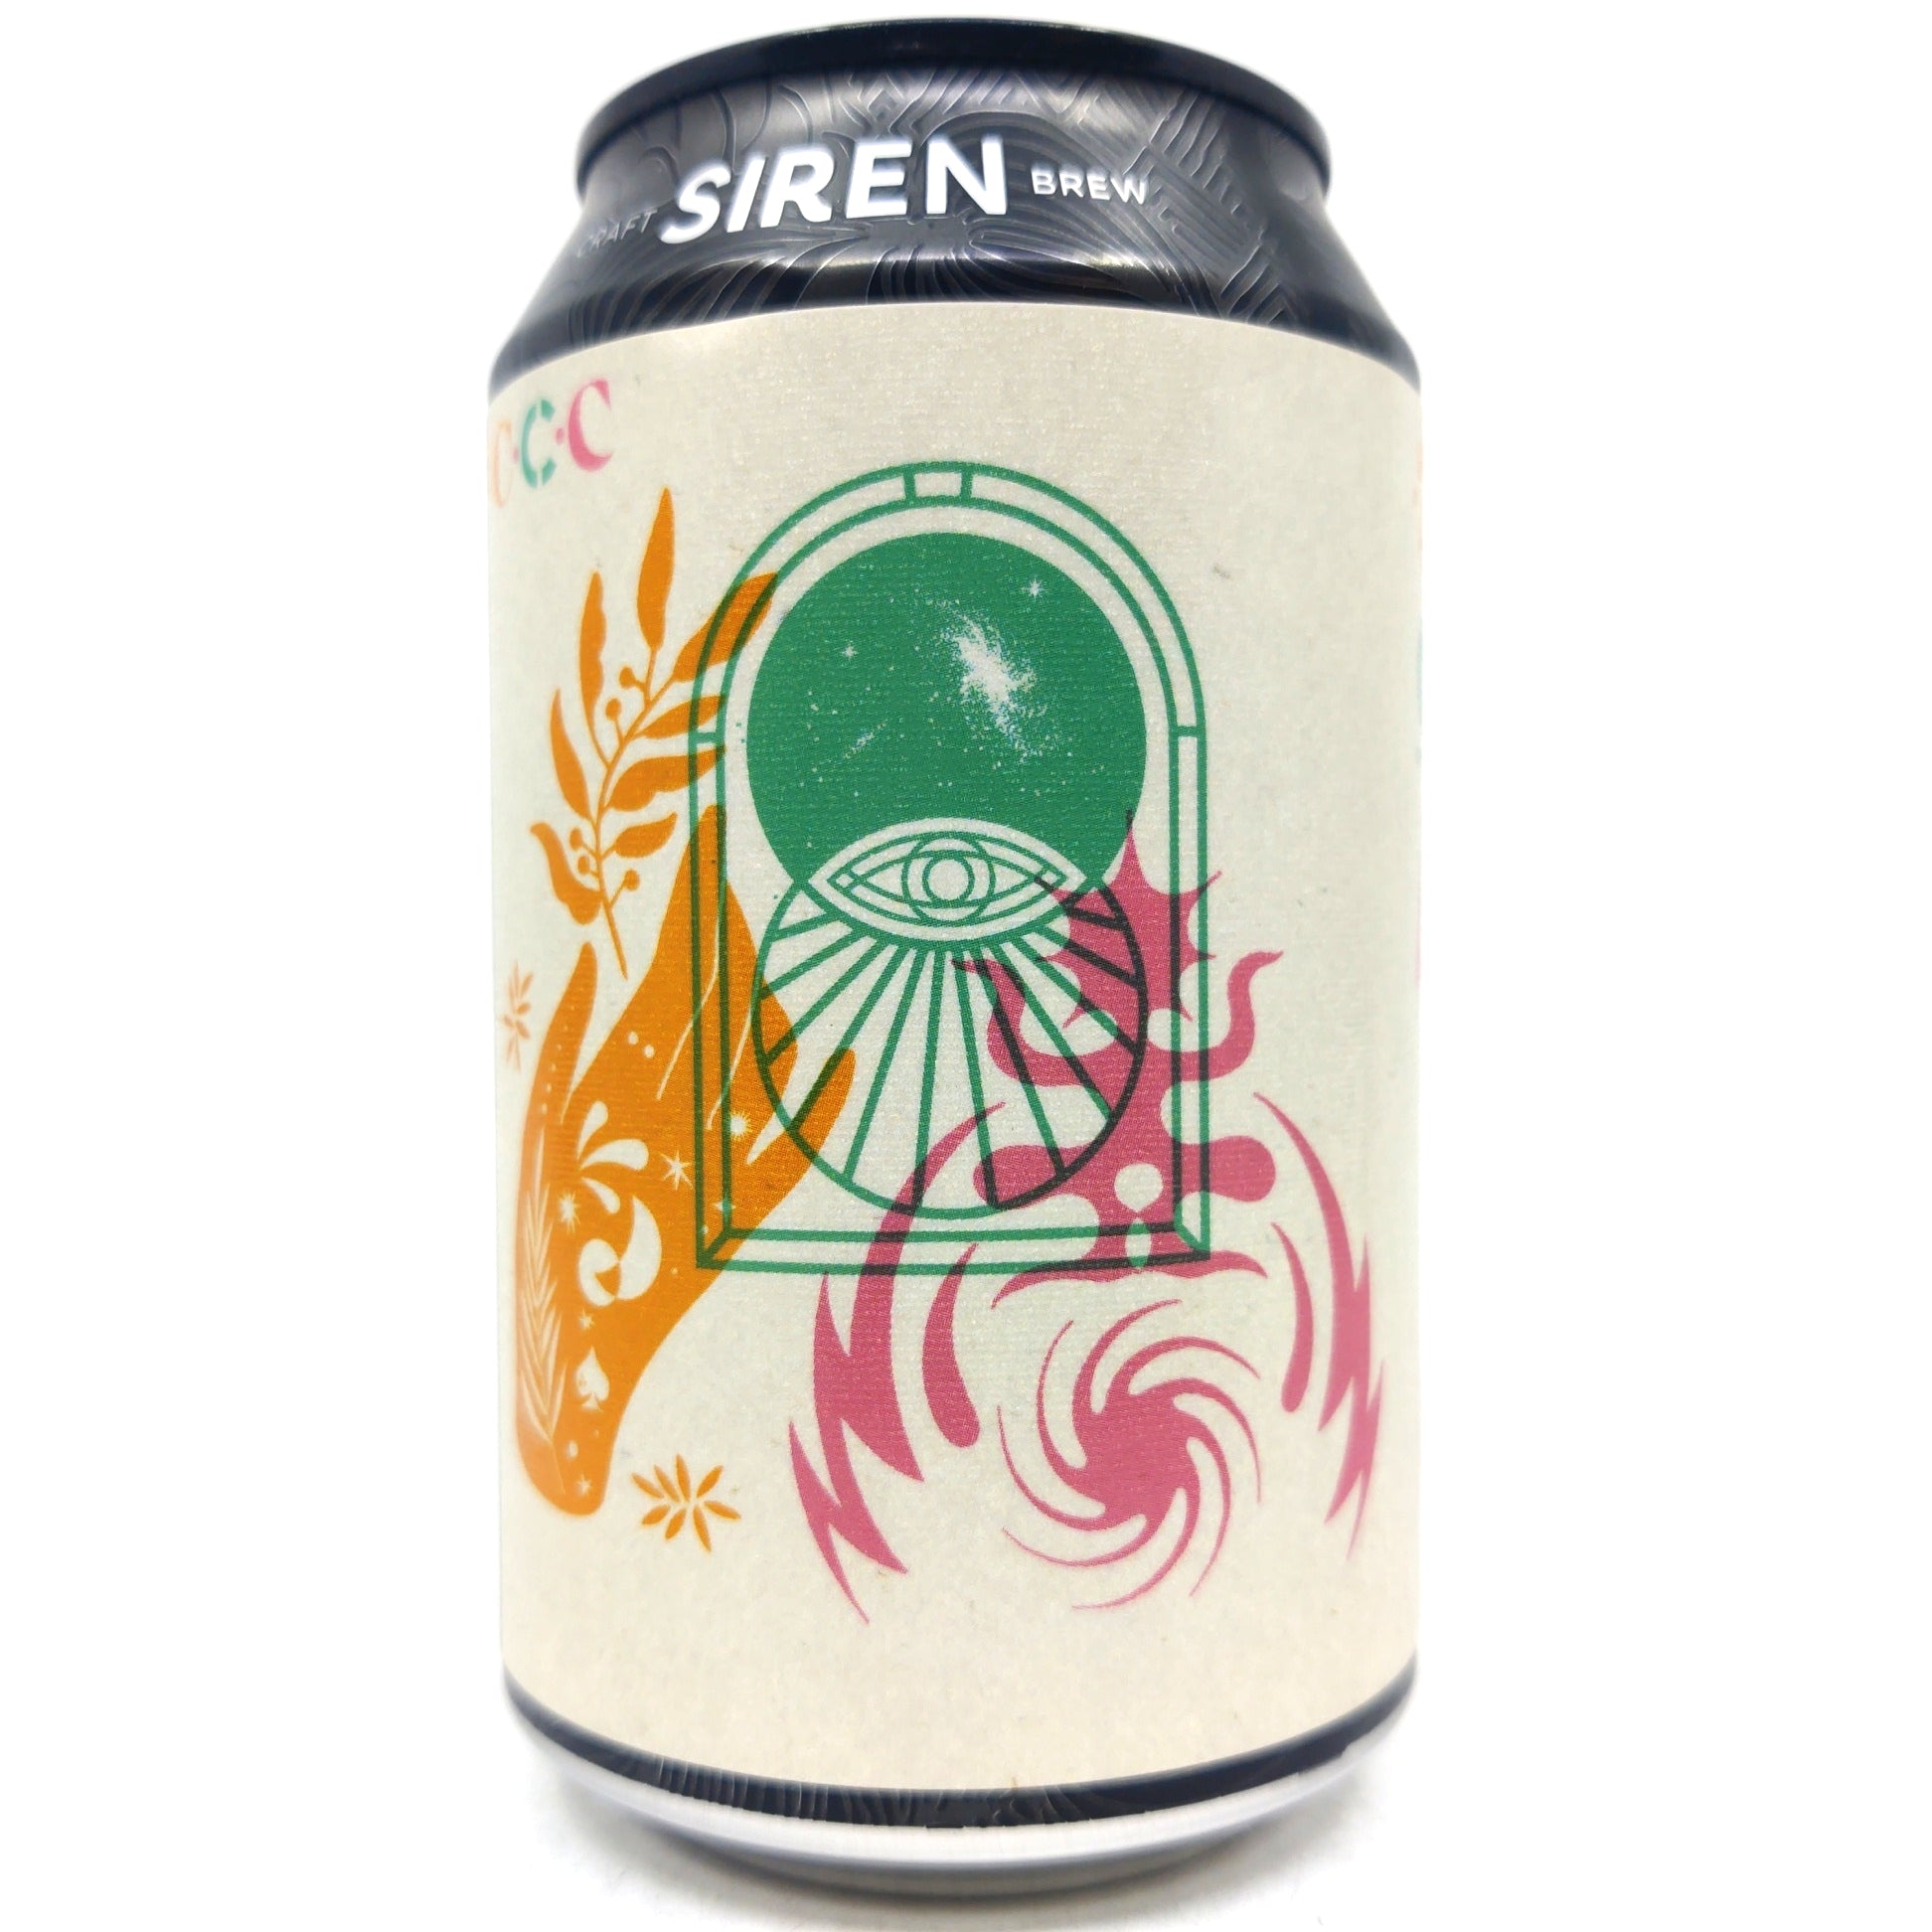 Siren 10th Anniversary Crescendo Imperial Stout (330ml can)-Hop Burns & Black